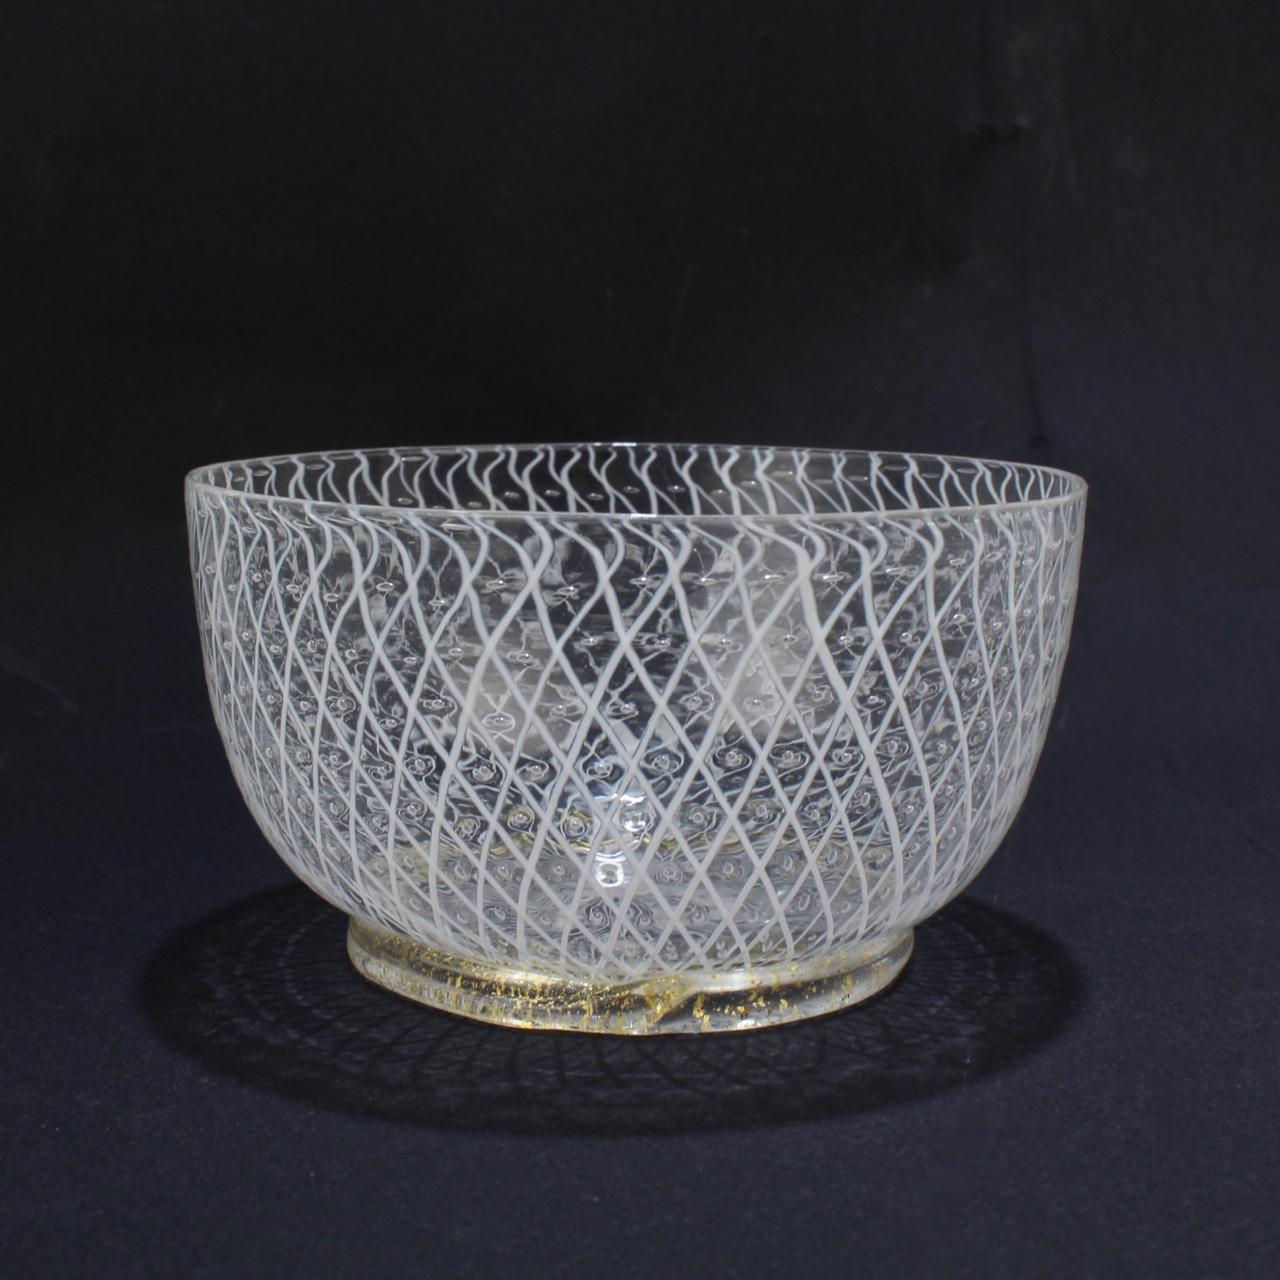 Set of 10 Venetian or Murano Glass Reticulo Filigrana Bowls and Plates 2